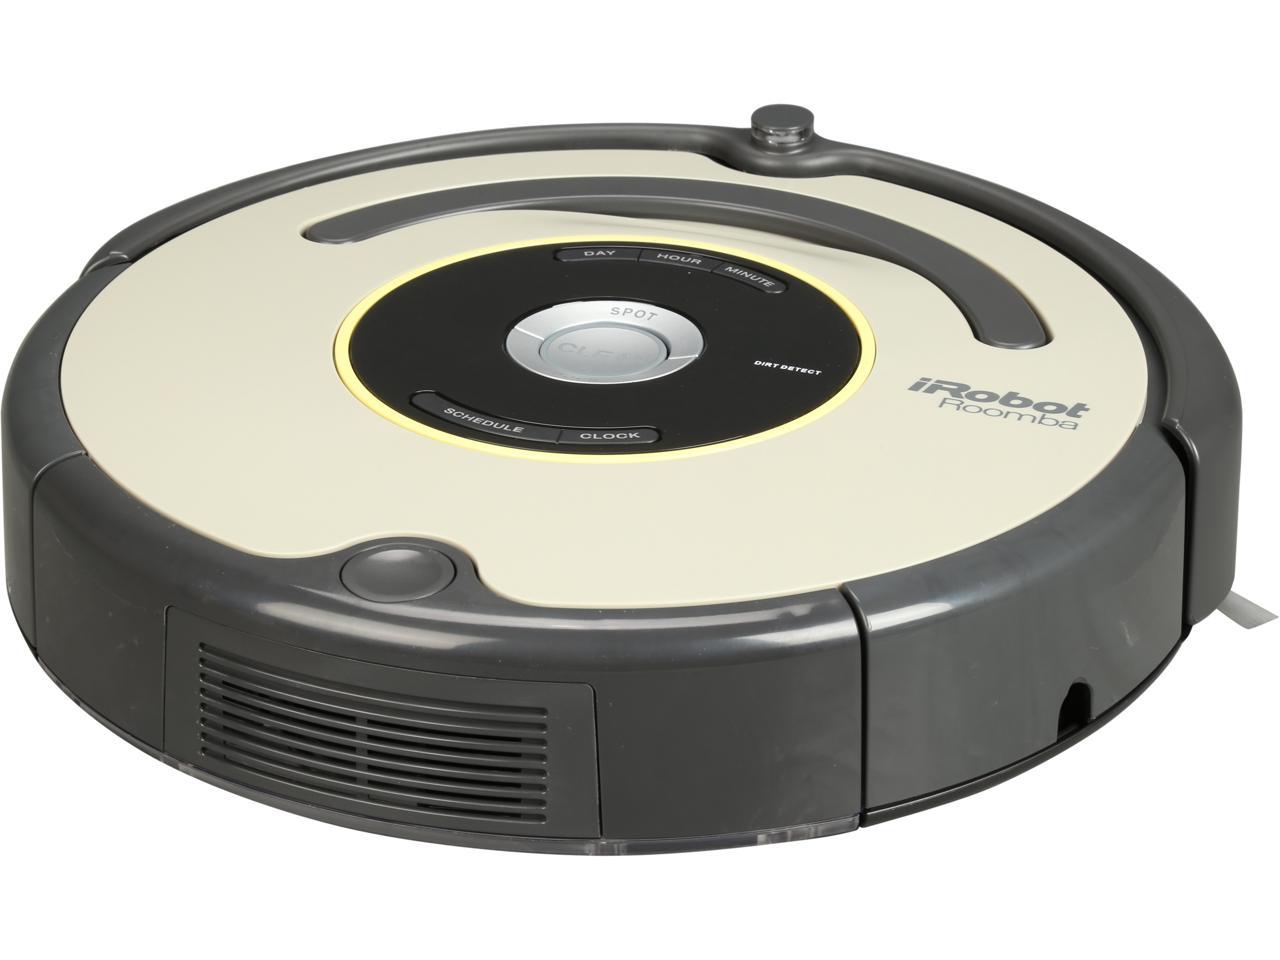 iRobot Roomba 650 Automatic Vacuum Cleaner Robot Includes Dock 